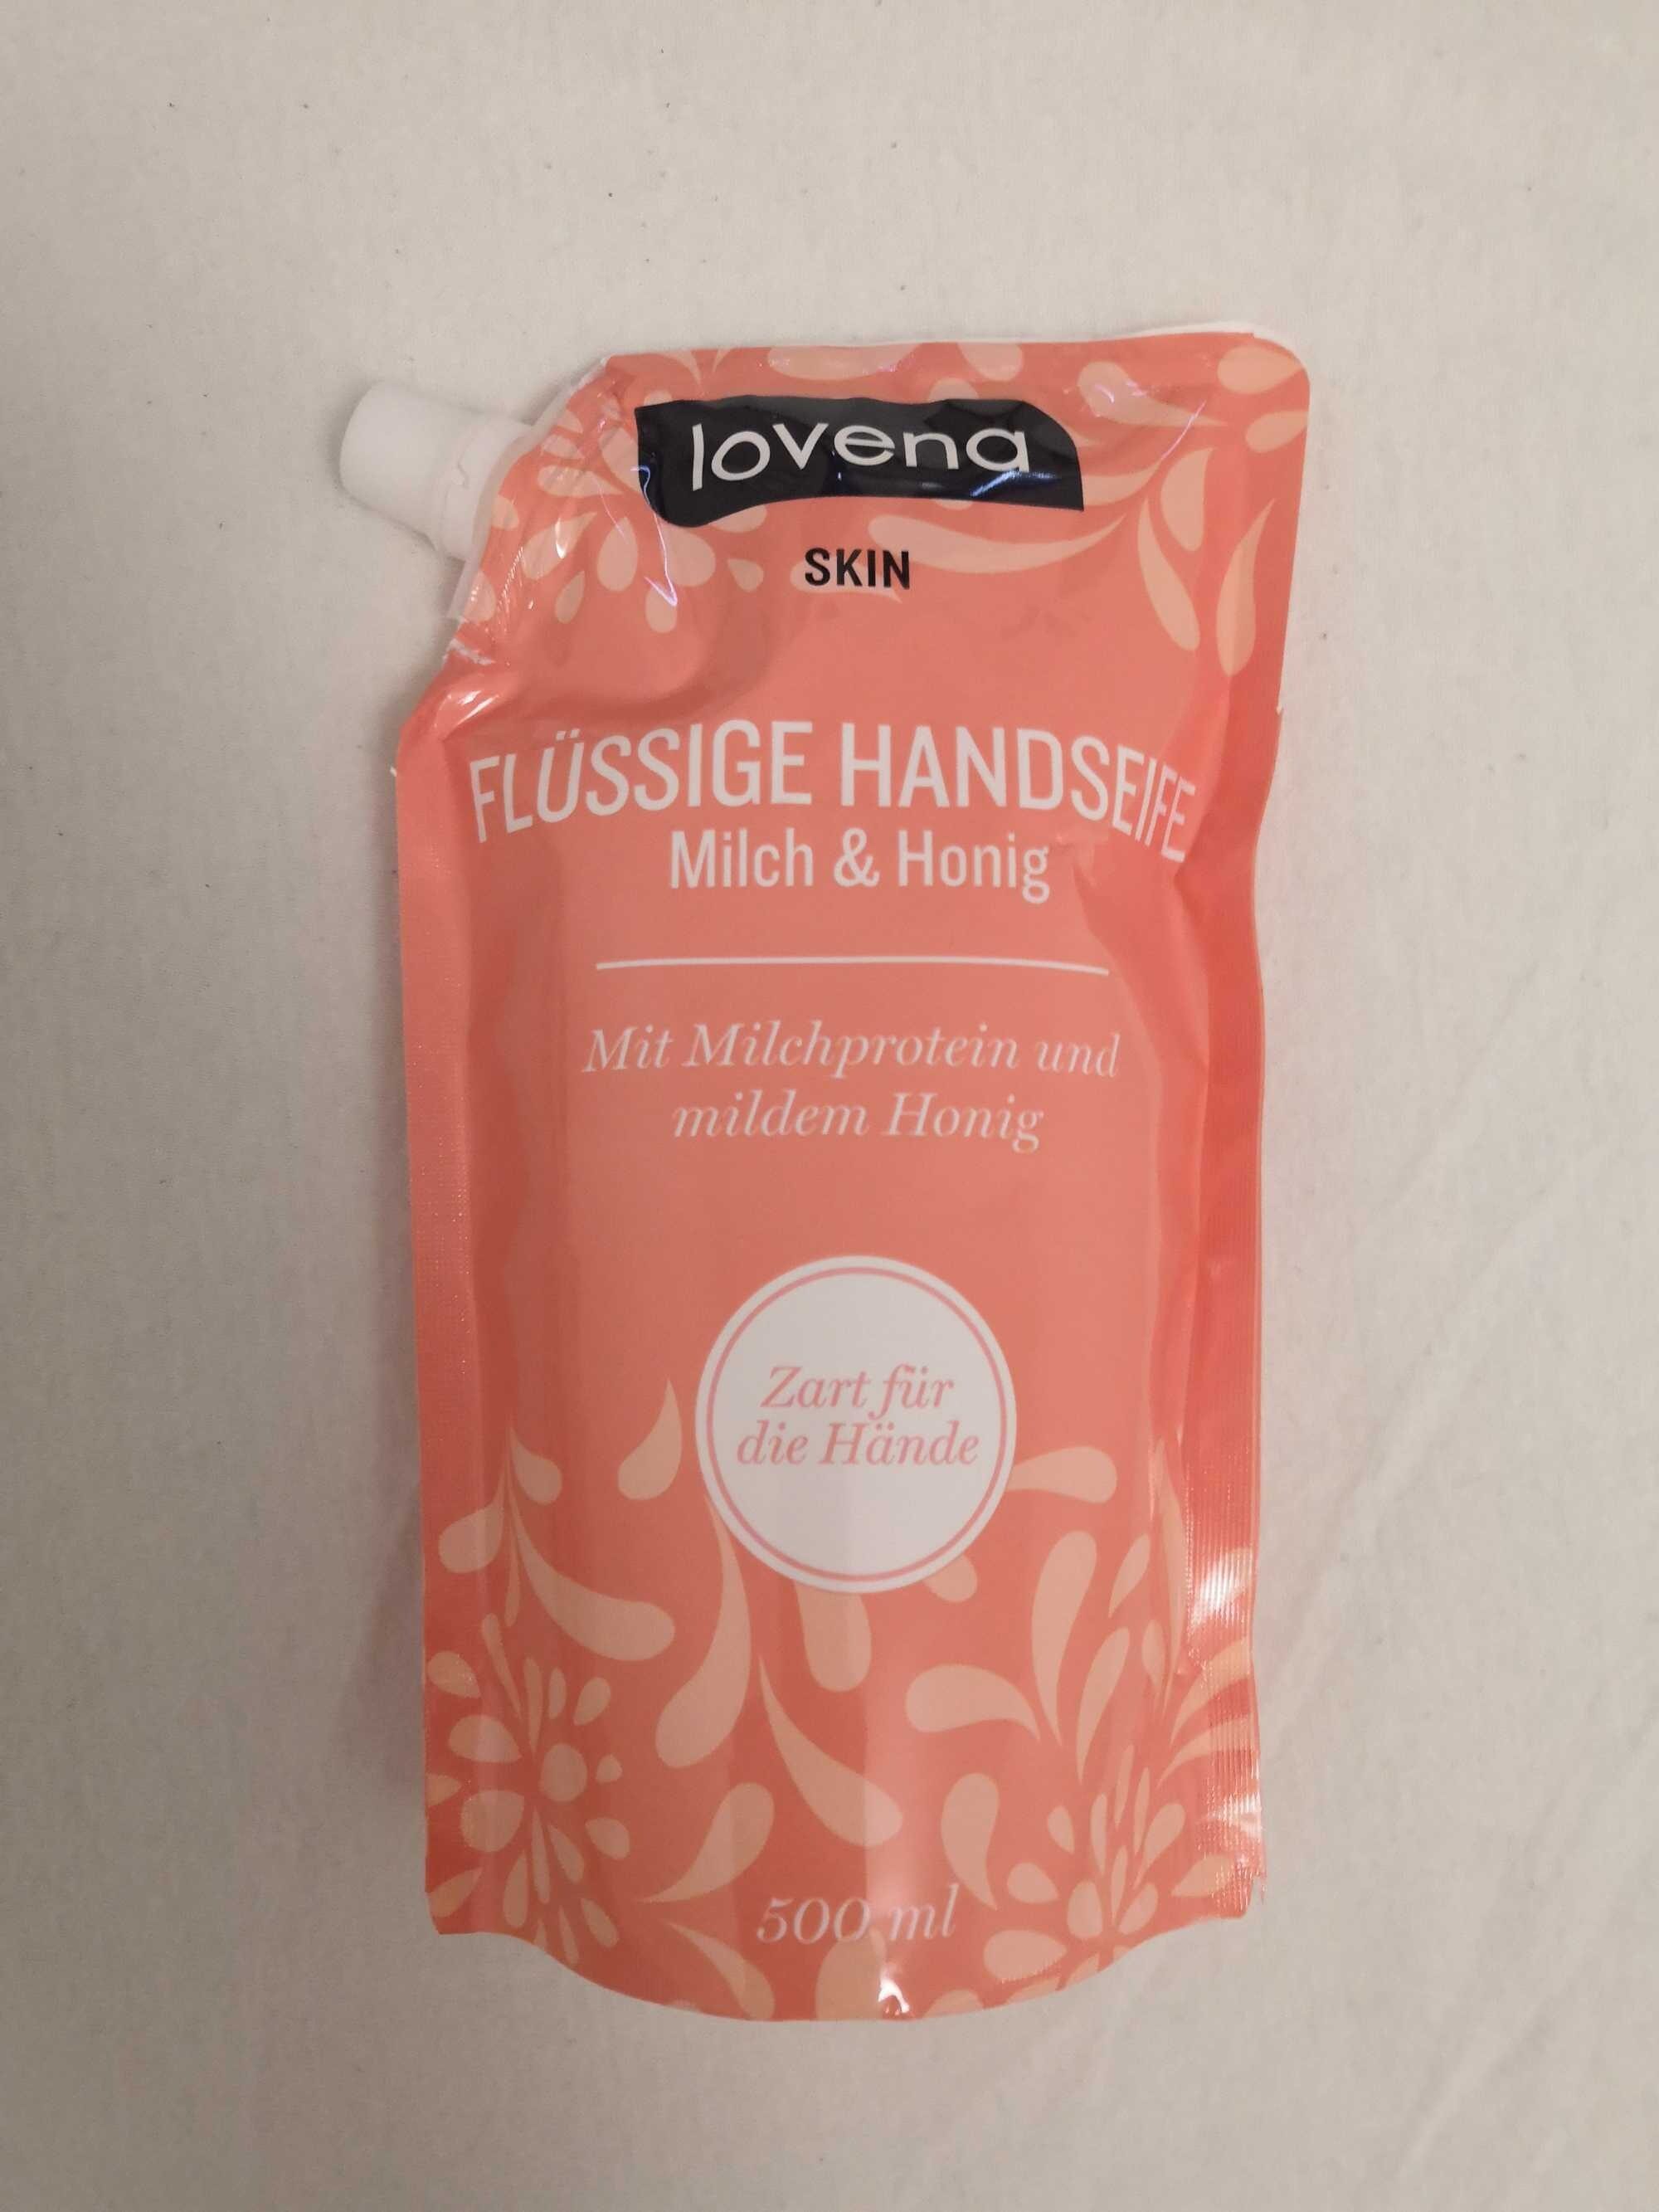 lovena Skin Flüssige Handseife Milch & Honig - Product - de